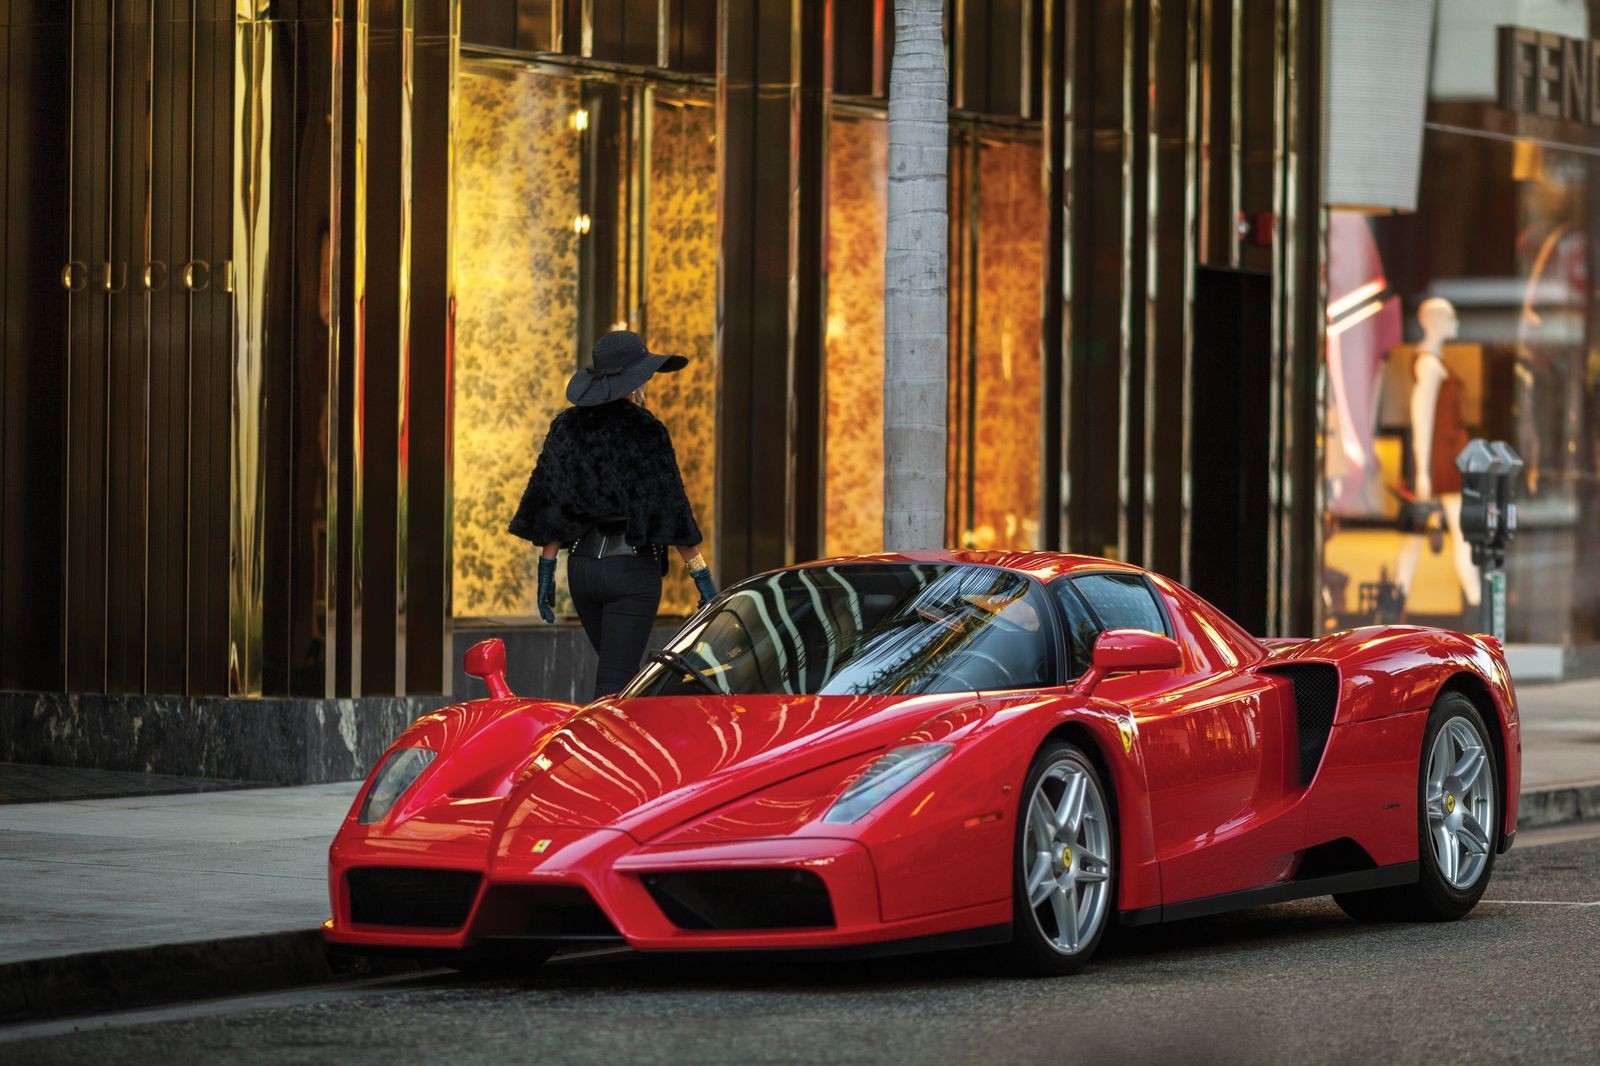 Floyd Mayweather Ferrari Enzo up for auction